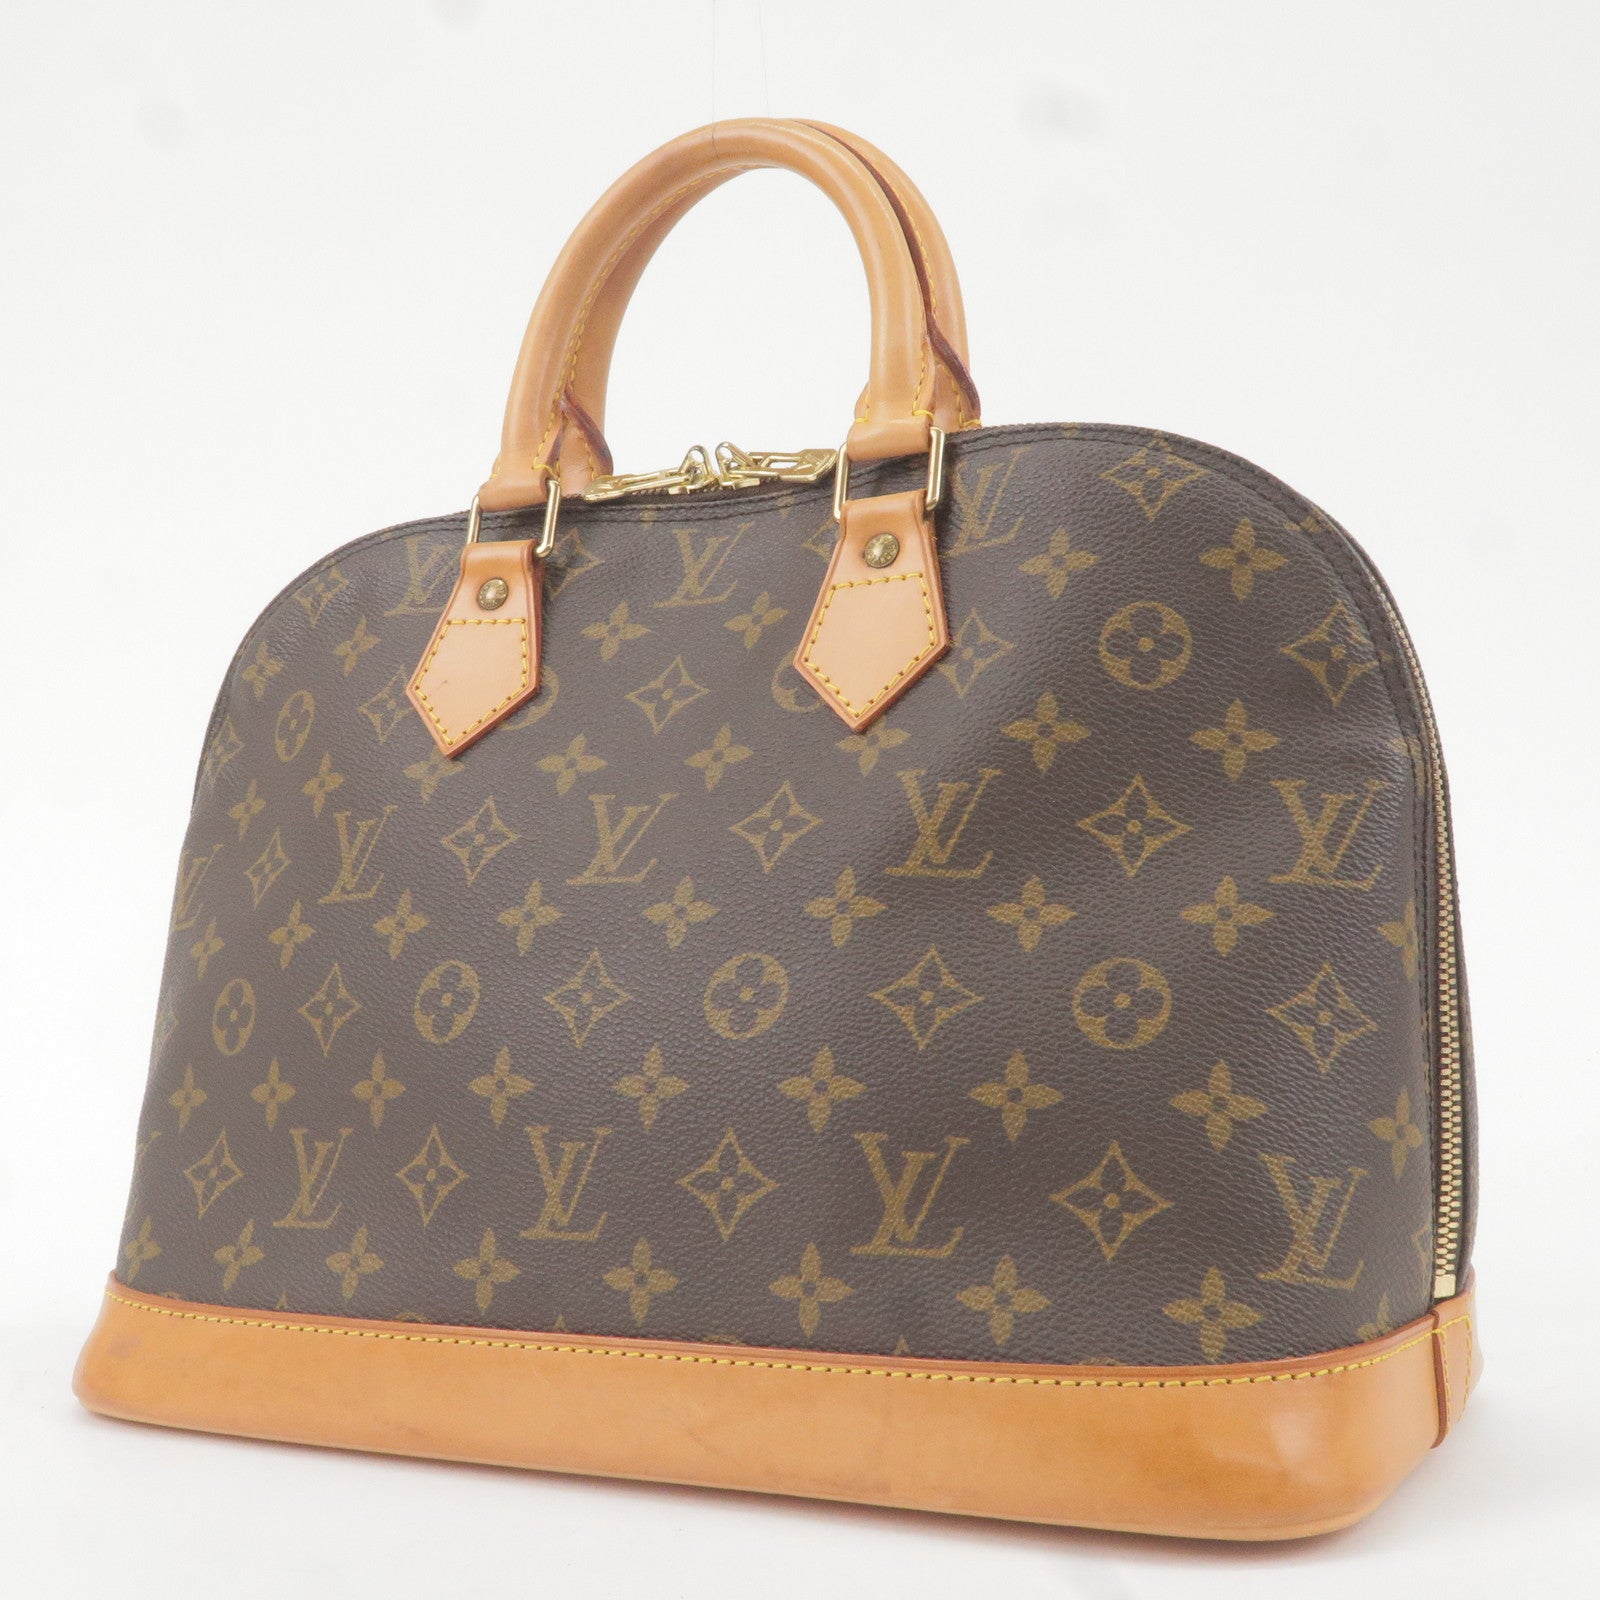 Monogram - Louis - Lexington - ep_vintage luxury Store - Vuitton